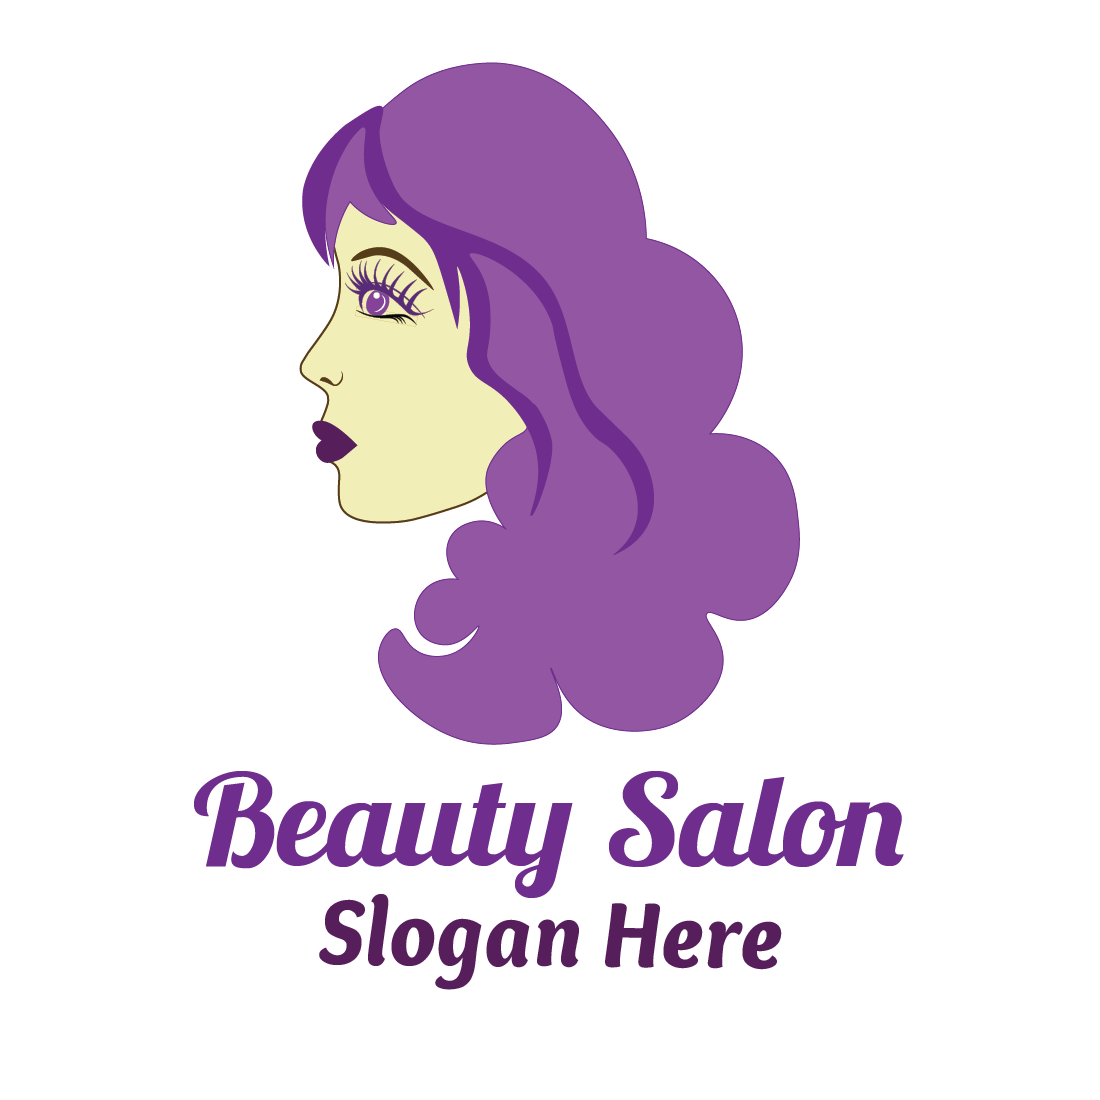 Unique Beauty salon/beauty spa logo template/creative beauty salon logo preview image.